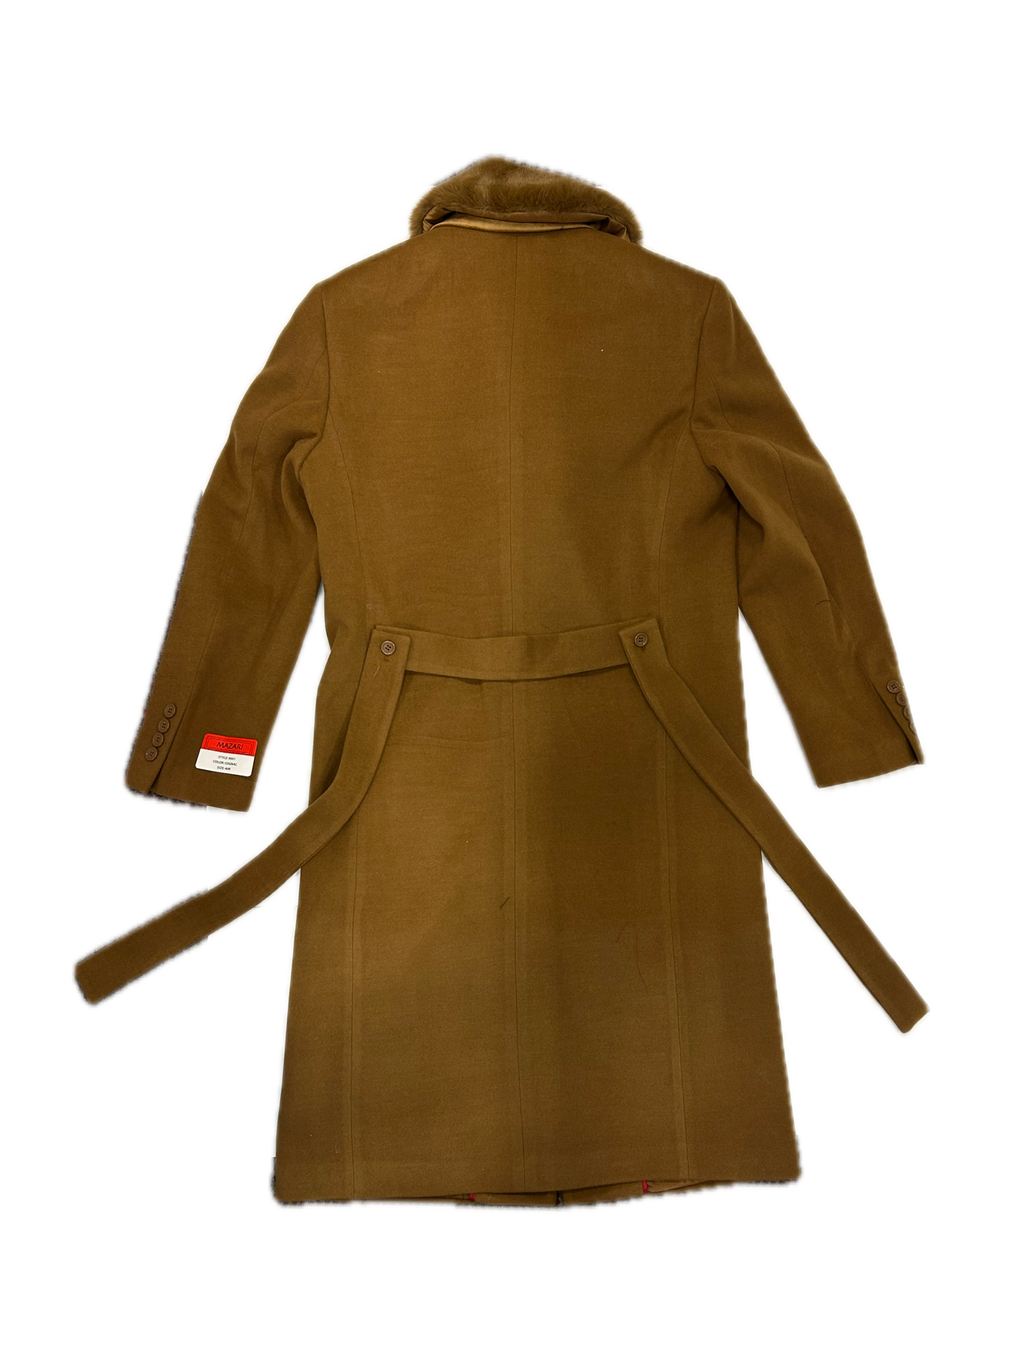 Mazari 9001 Top Coat With Fur Collar Cognac – Napoly Menswear